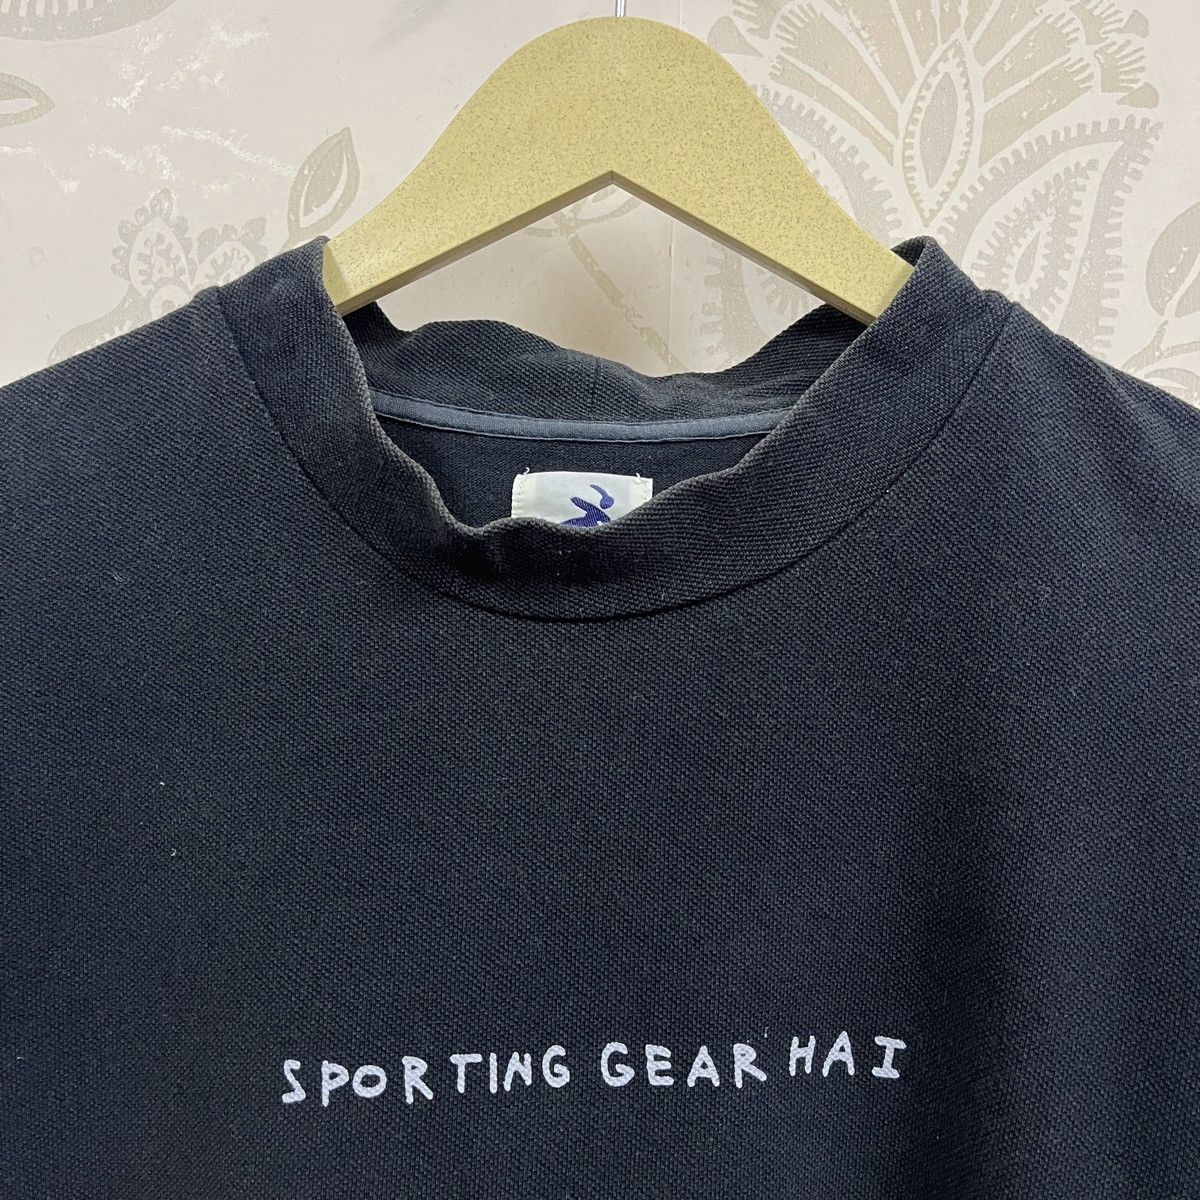 Vintage Hai Sporting Gear Lacoste Cotton TShirt - 19